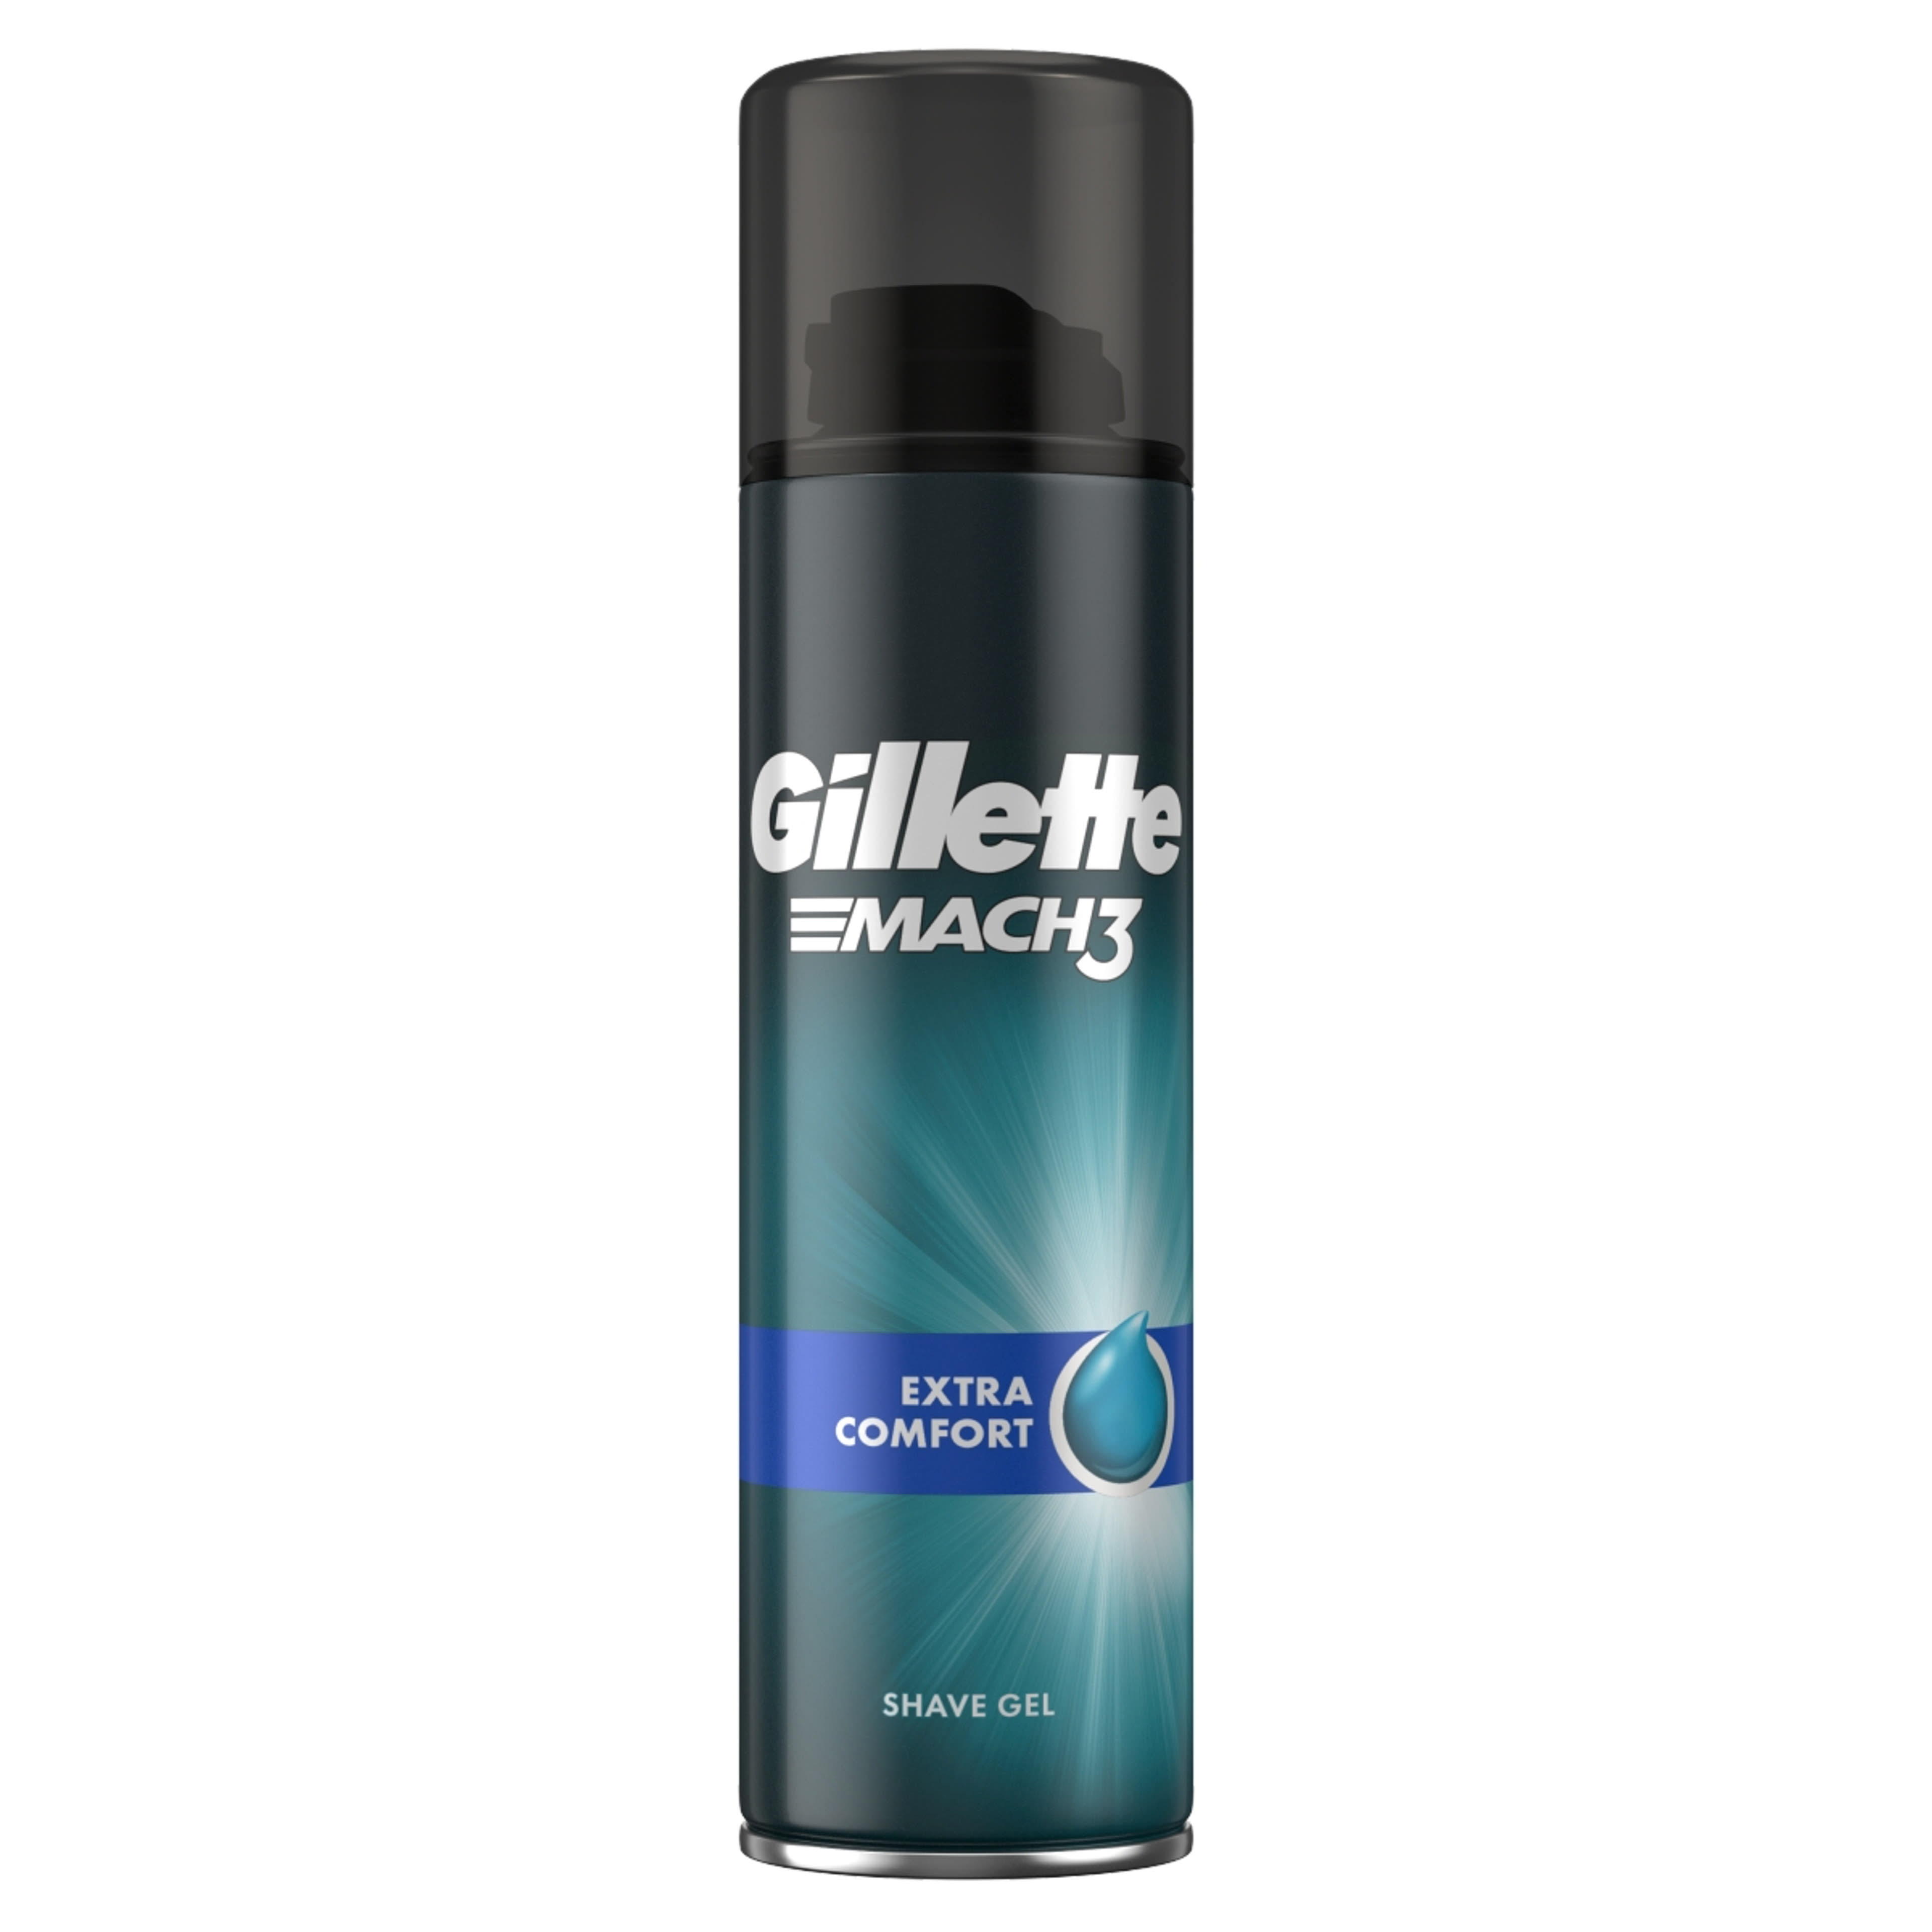 Gillette Mach3 bornyugtató borotvazselé - 200 ml